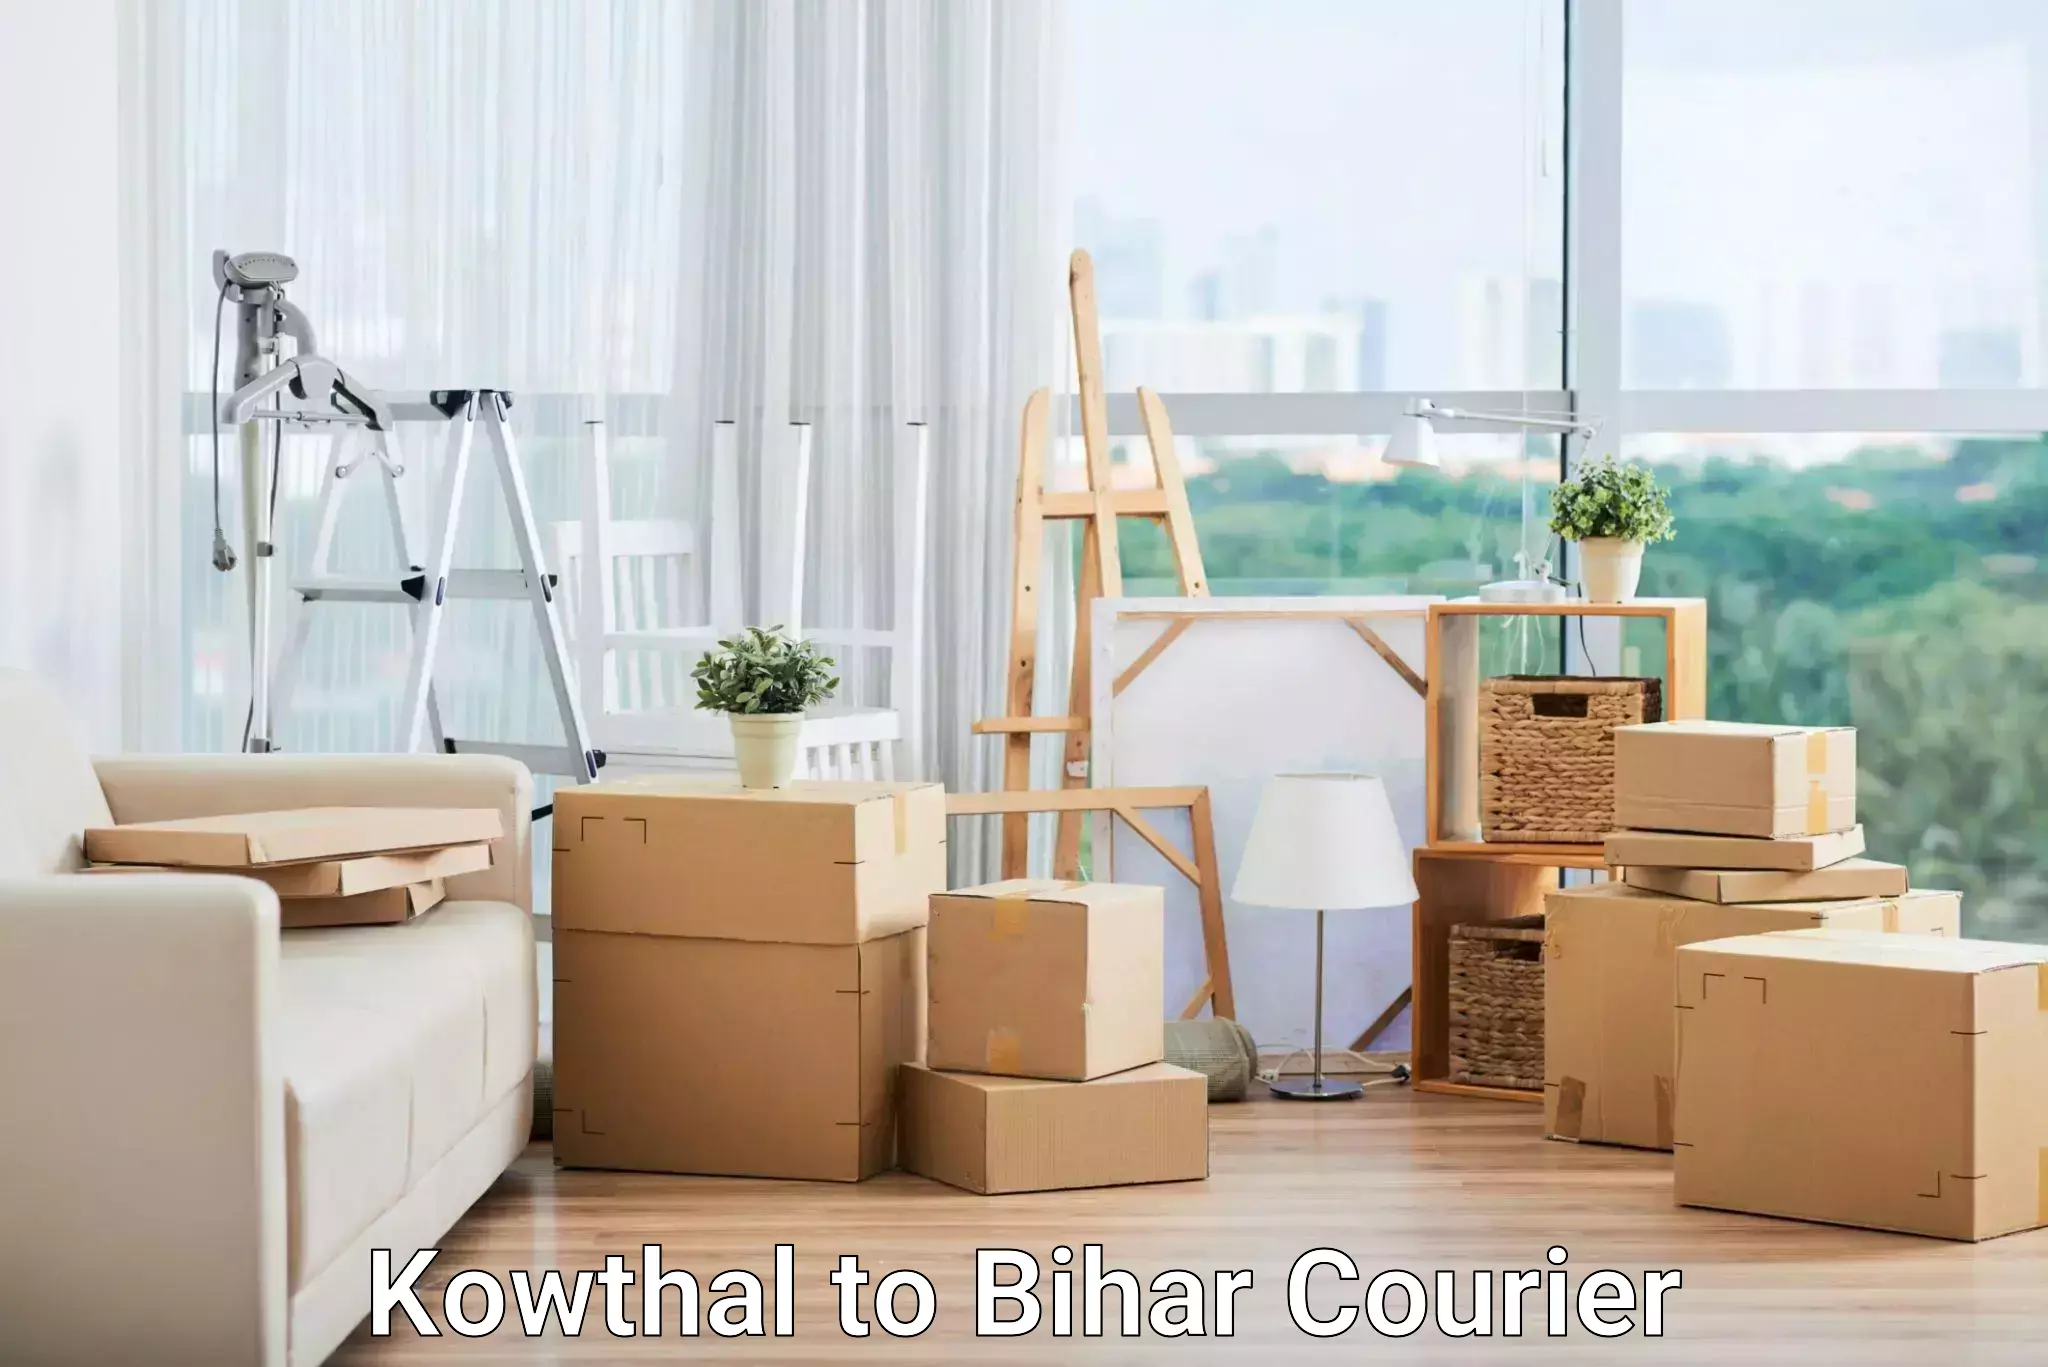 Courier service efficiency Kowthal to Bihar